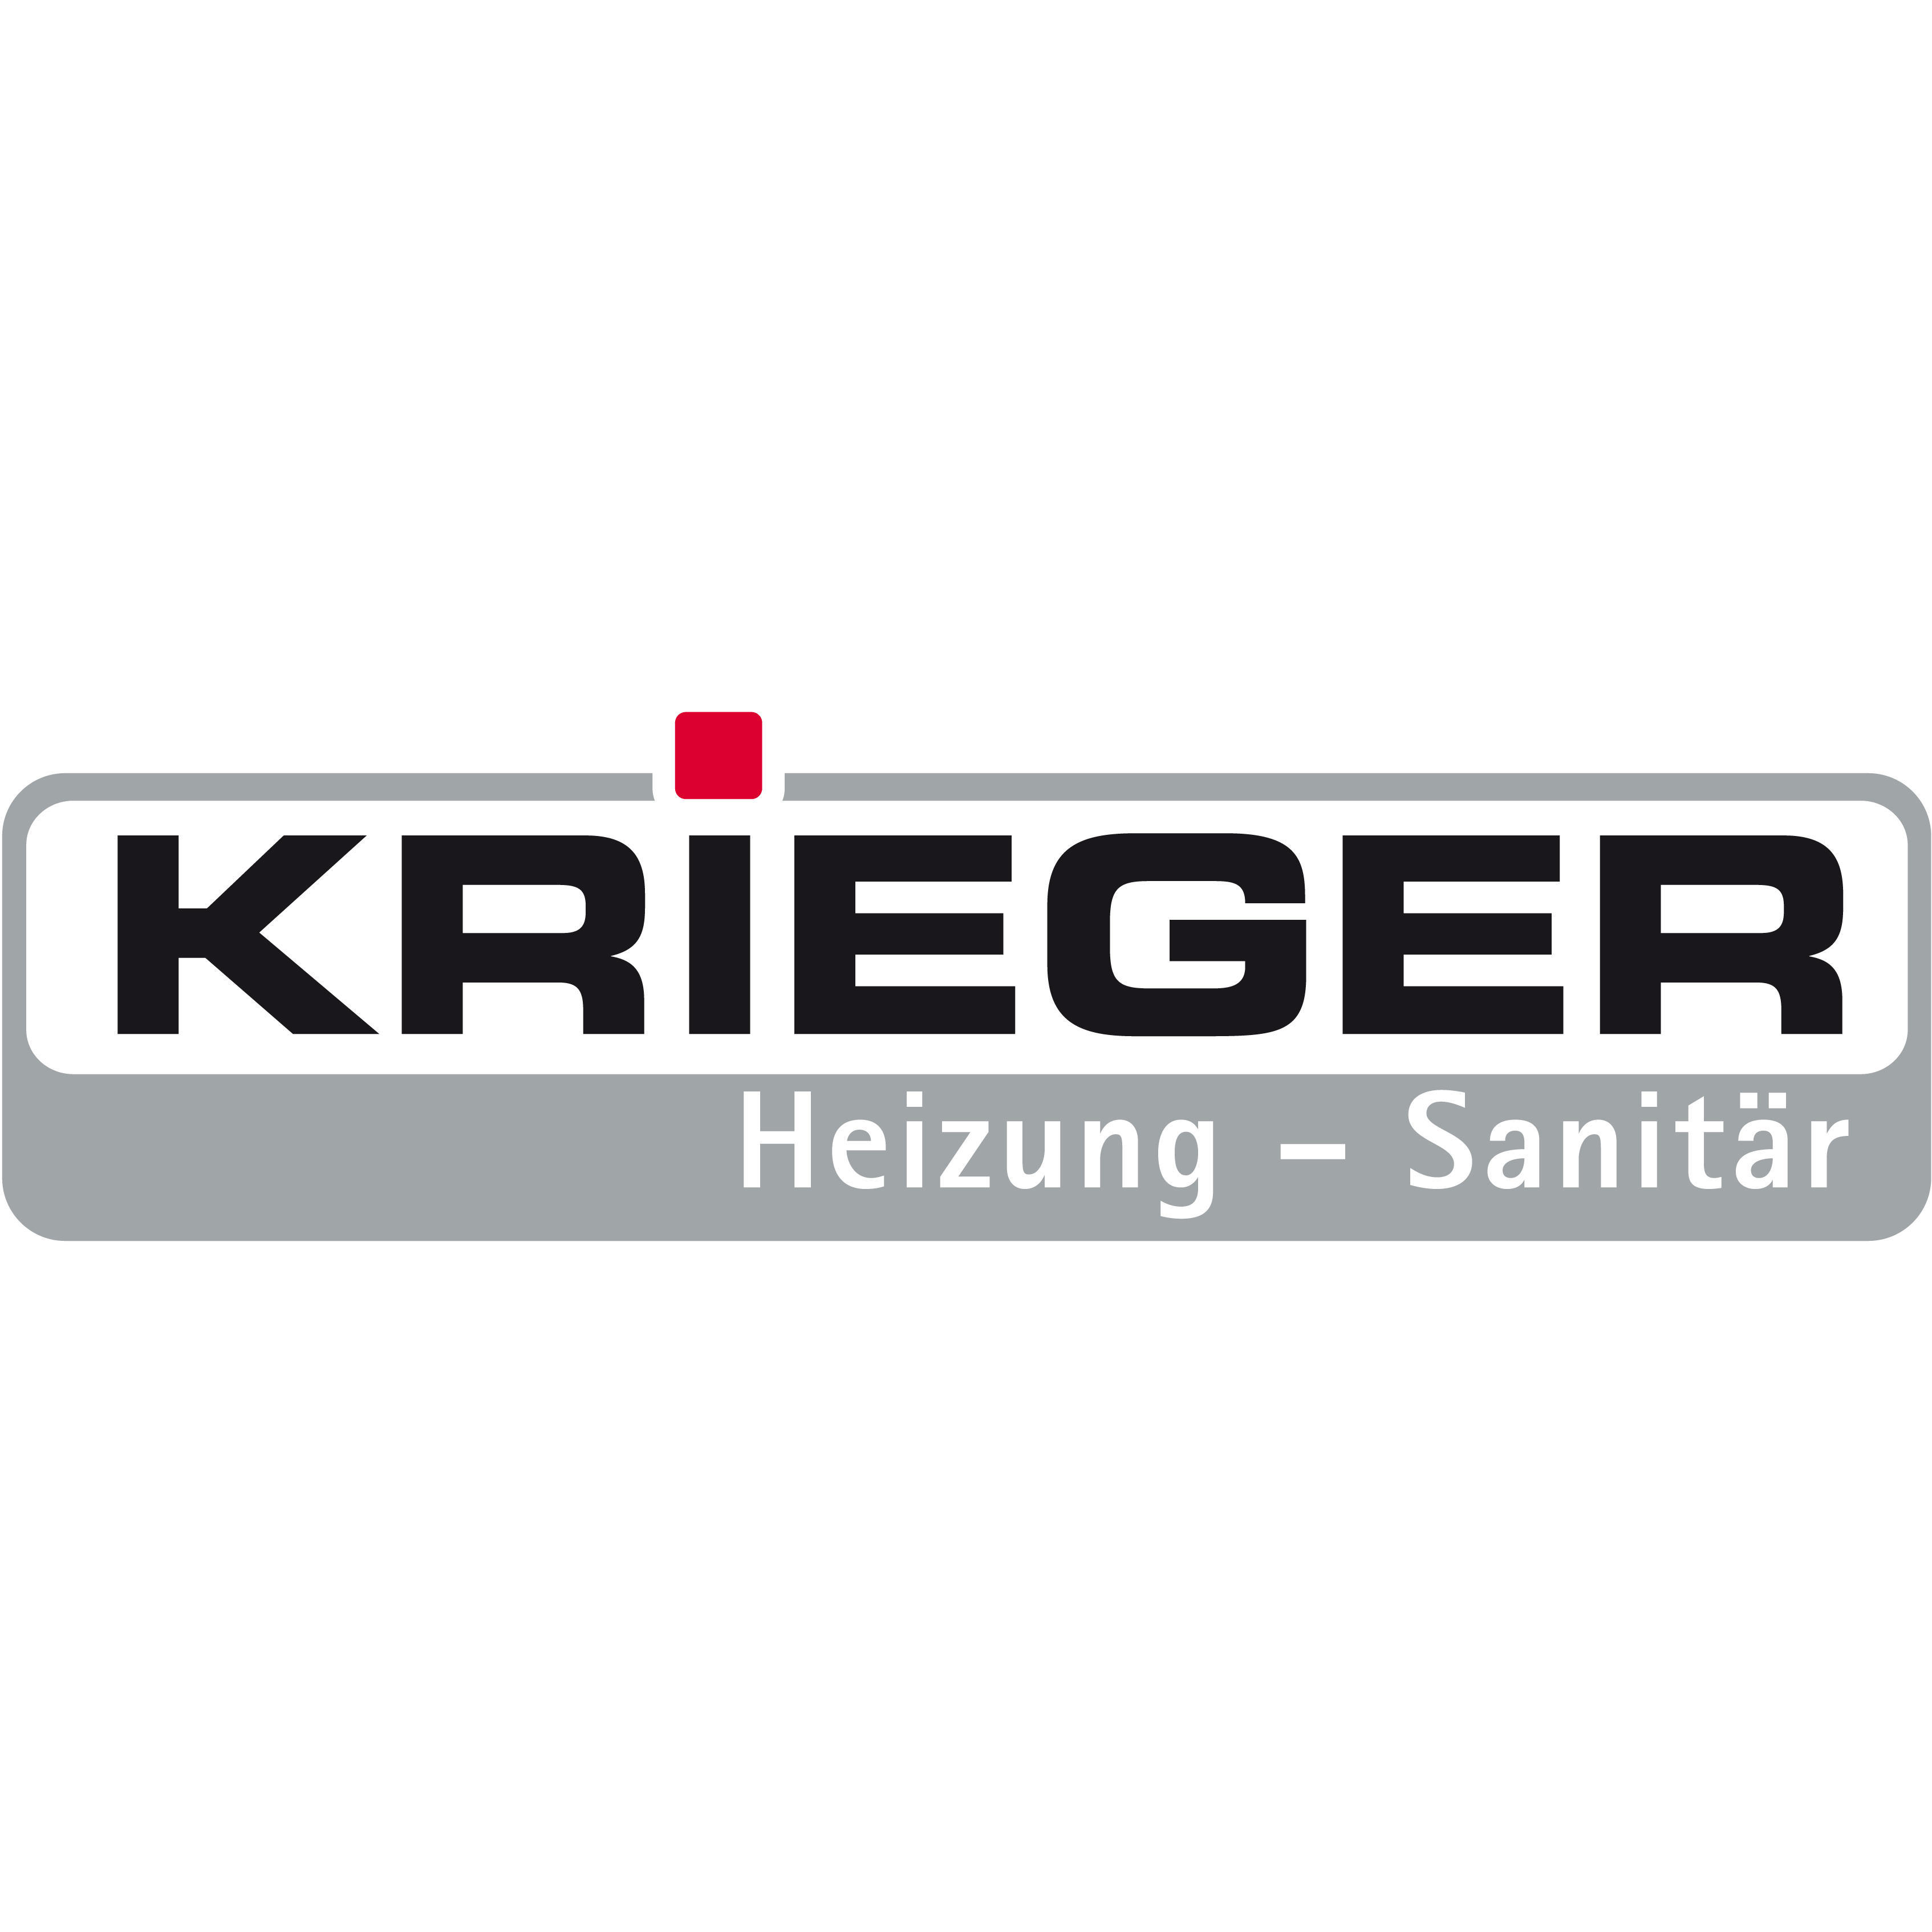 Krieger Heizung-Sanitär GmbH & Co. KG in Aurach - Logo